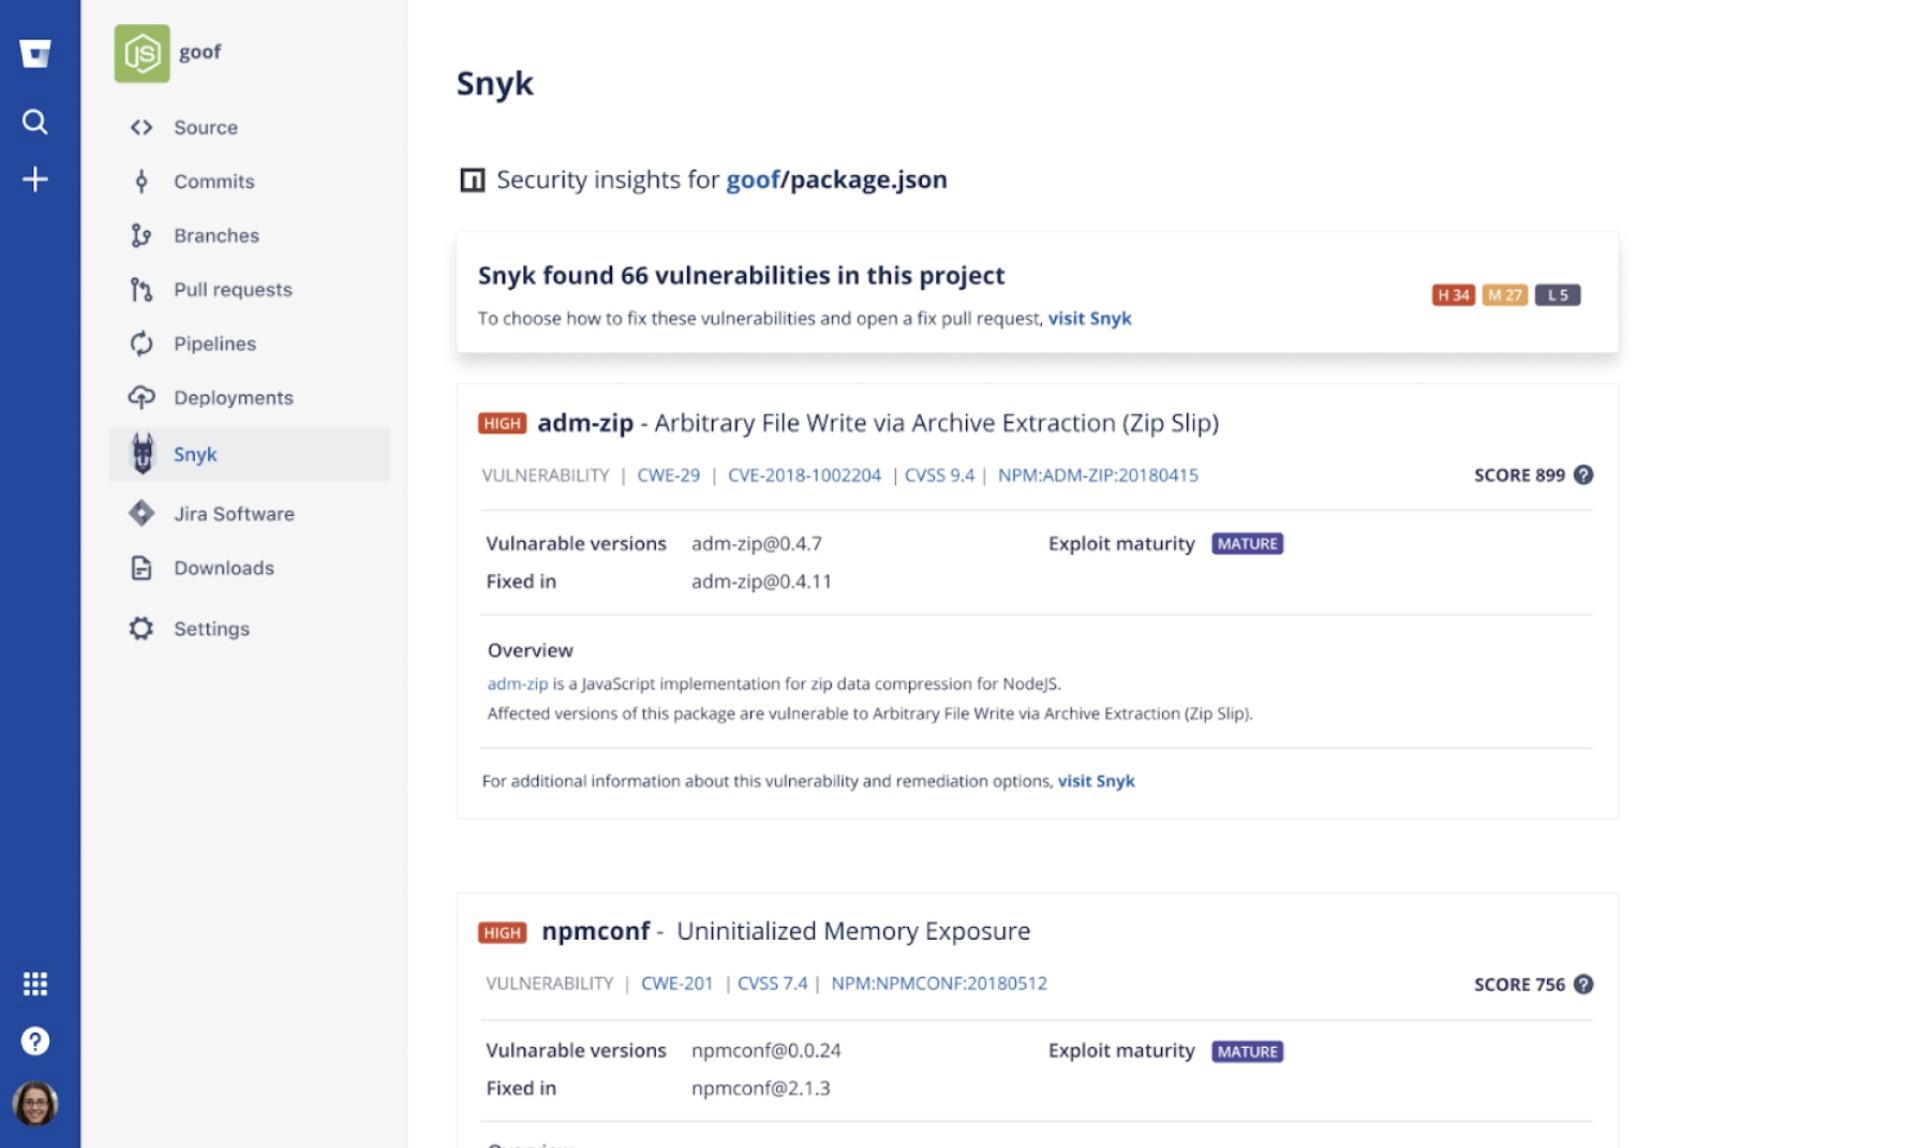 Snyk vulnerability report screenshot.